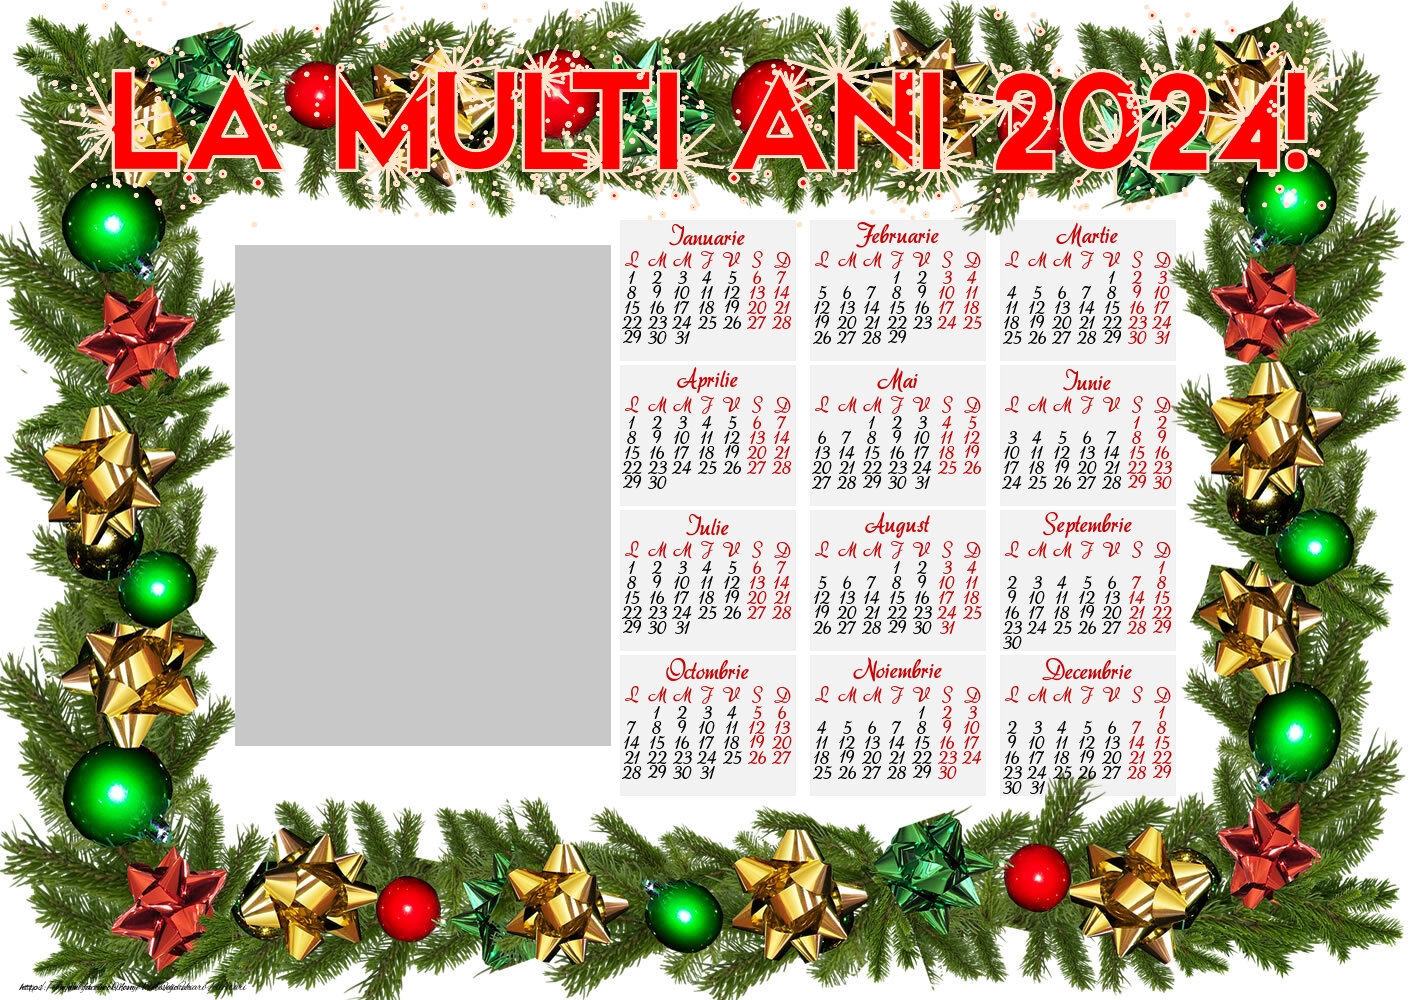 Felicitari personalizate cu calendare - La multi ani 2024! - Calendar Model 0031